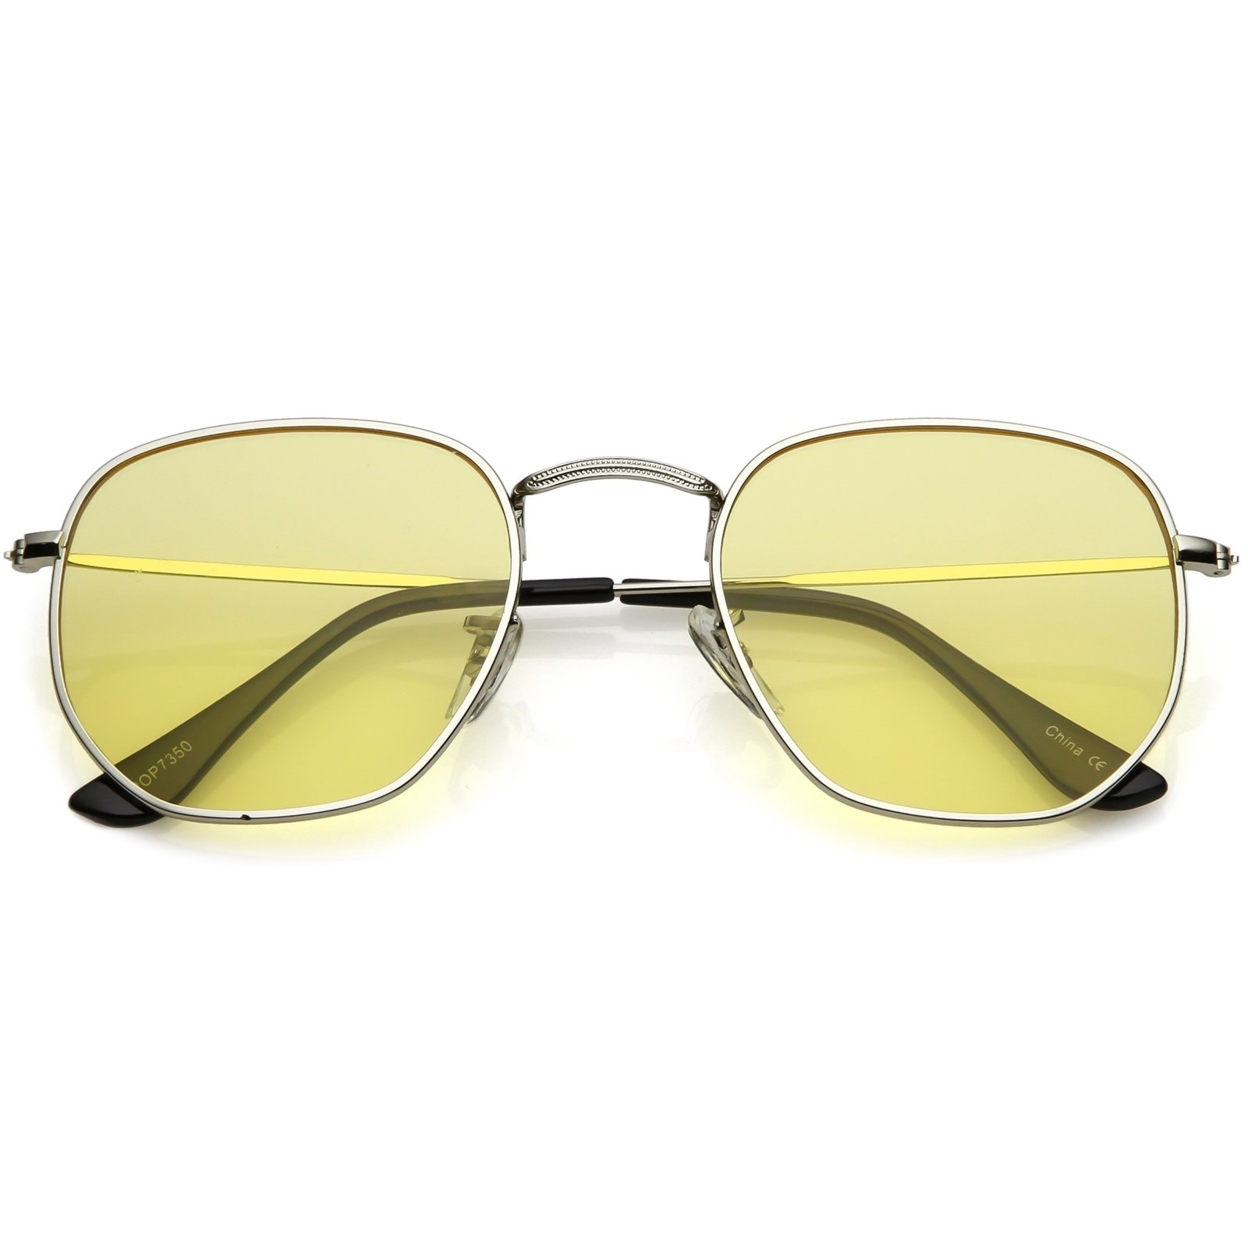 Modern Geometric Hexagonal Sunglasses Metal Slim Arms Colored Tinted Flat Lens 51mm - Silver / Clear